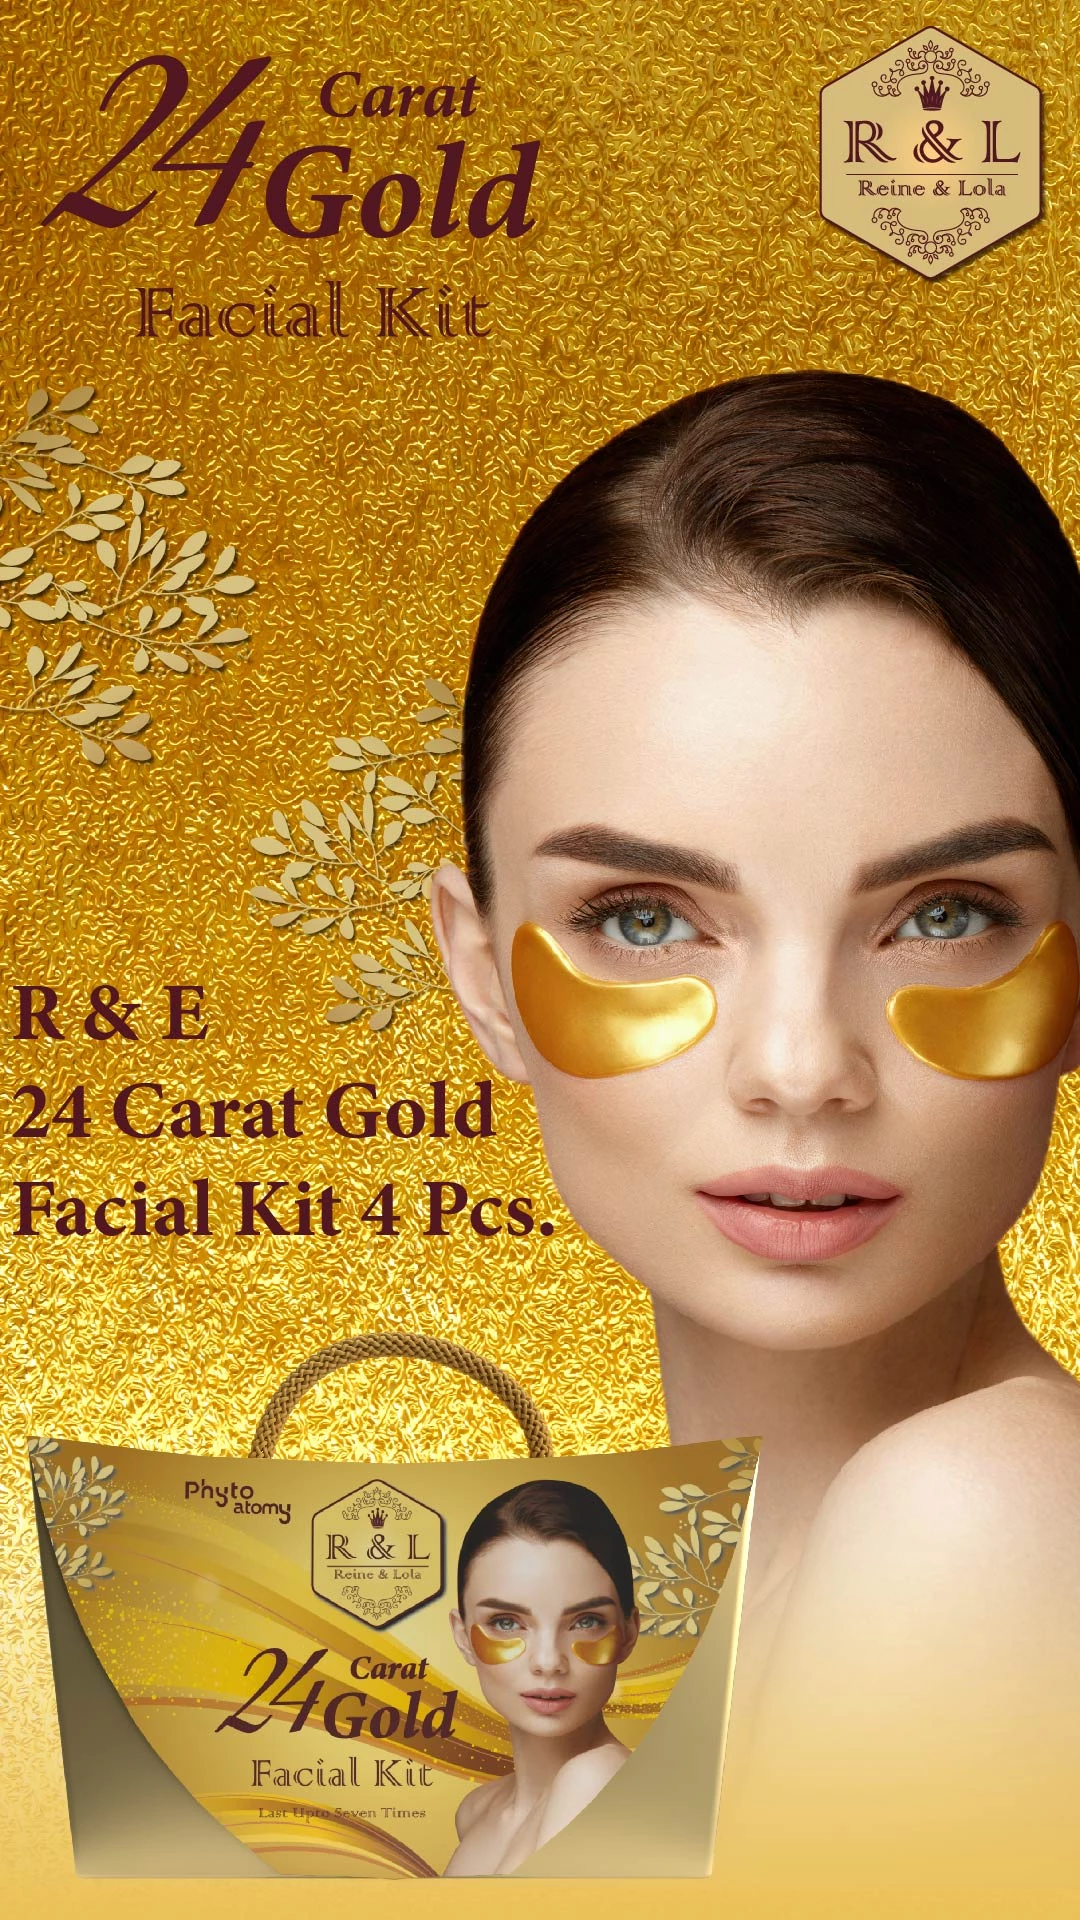 RBV B2B R & L 24 Carat Gold Facial Kit 4 Pcs.